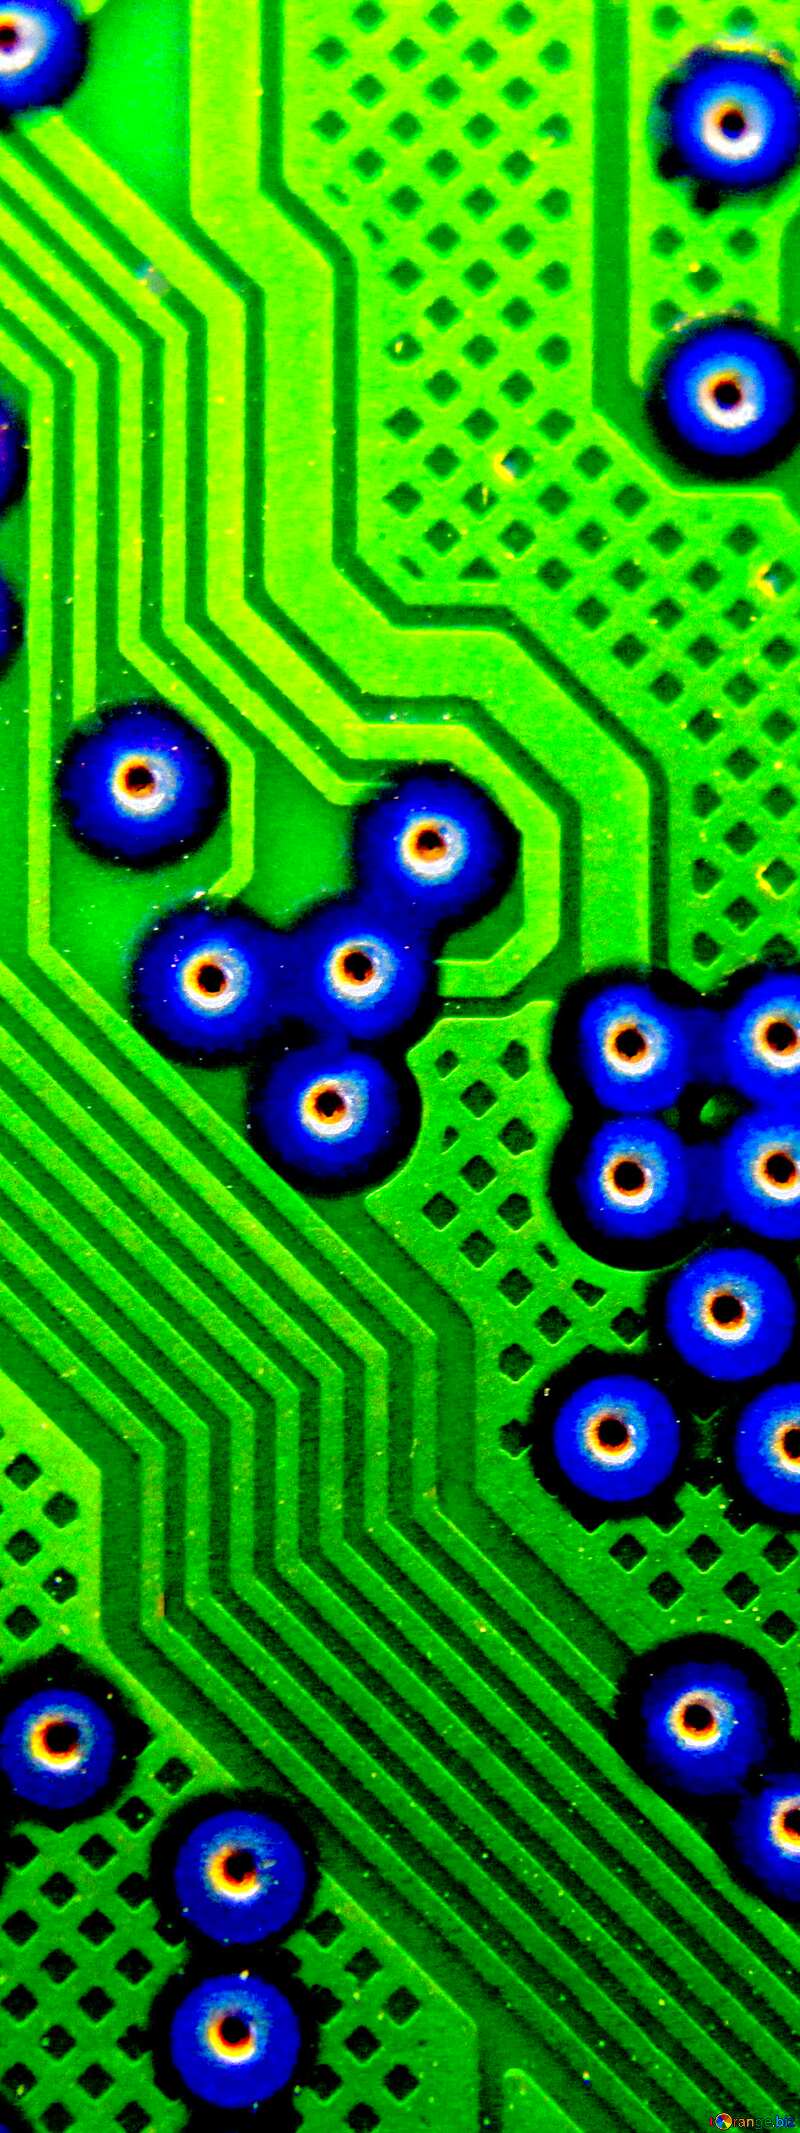 Green printed circuit board chip №51569